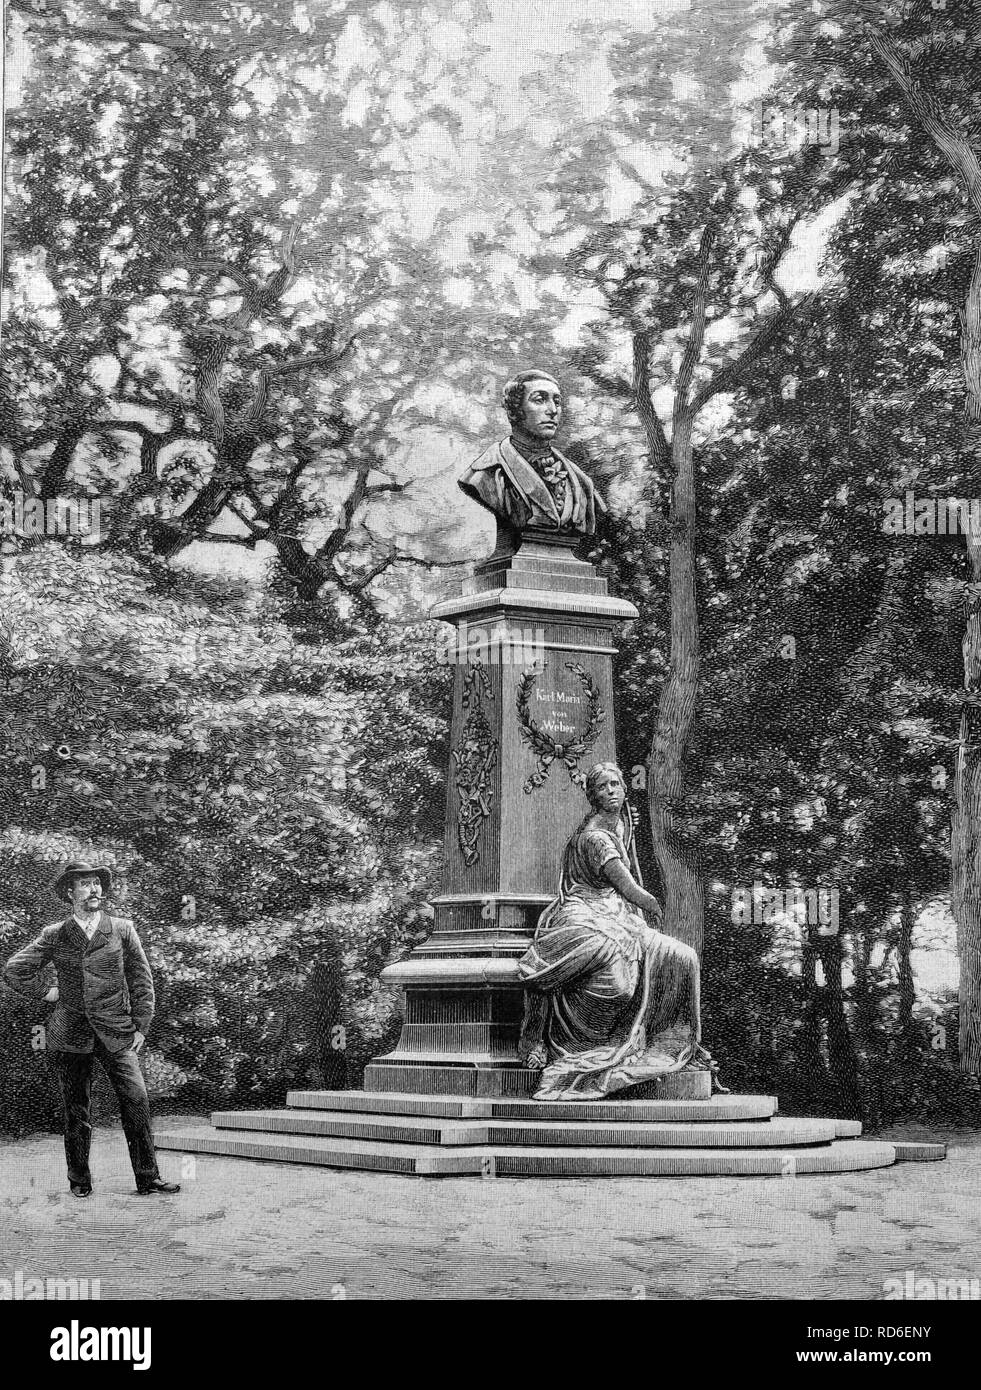 Memorial of Carl Maria von Weber in Eutin, Schleswig-Holstein, Germany, historical illustration circa 1893 Stock Photo